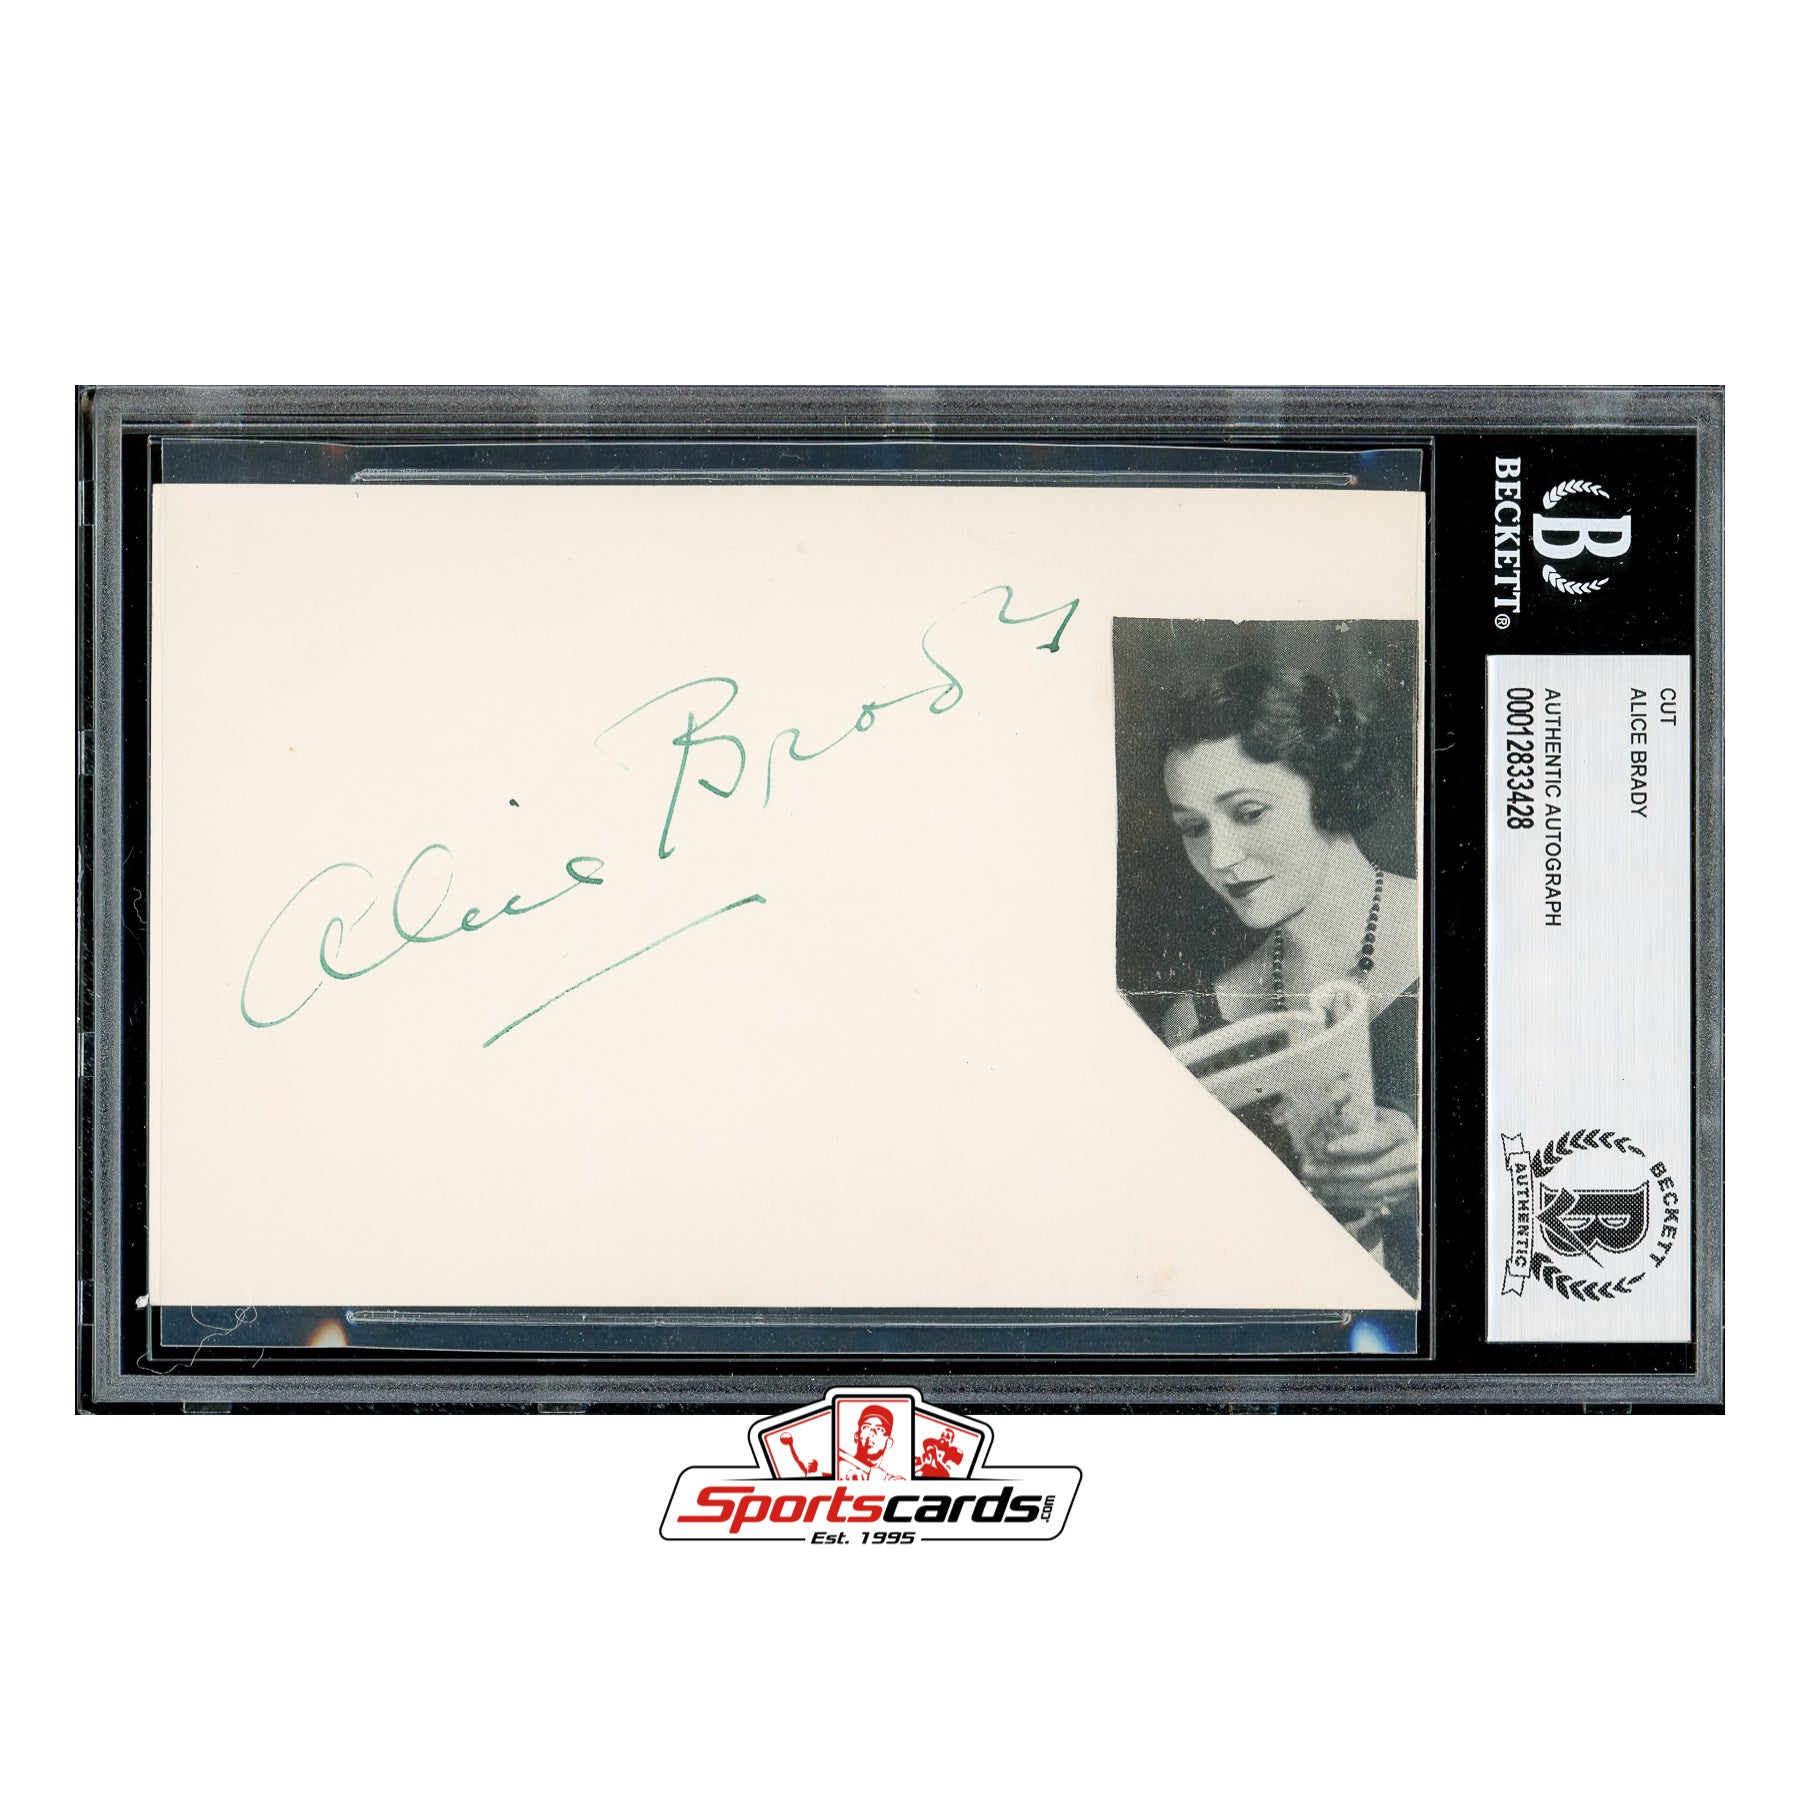 Alice Brady (d.1939) Signed Auto Album Page Beckett BAS - Academy Award Winner